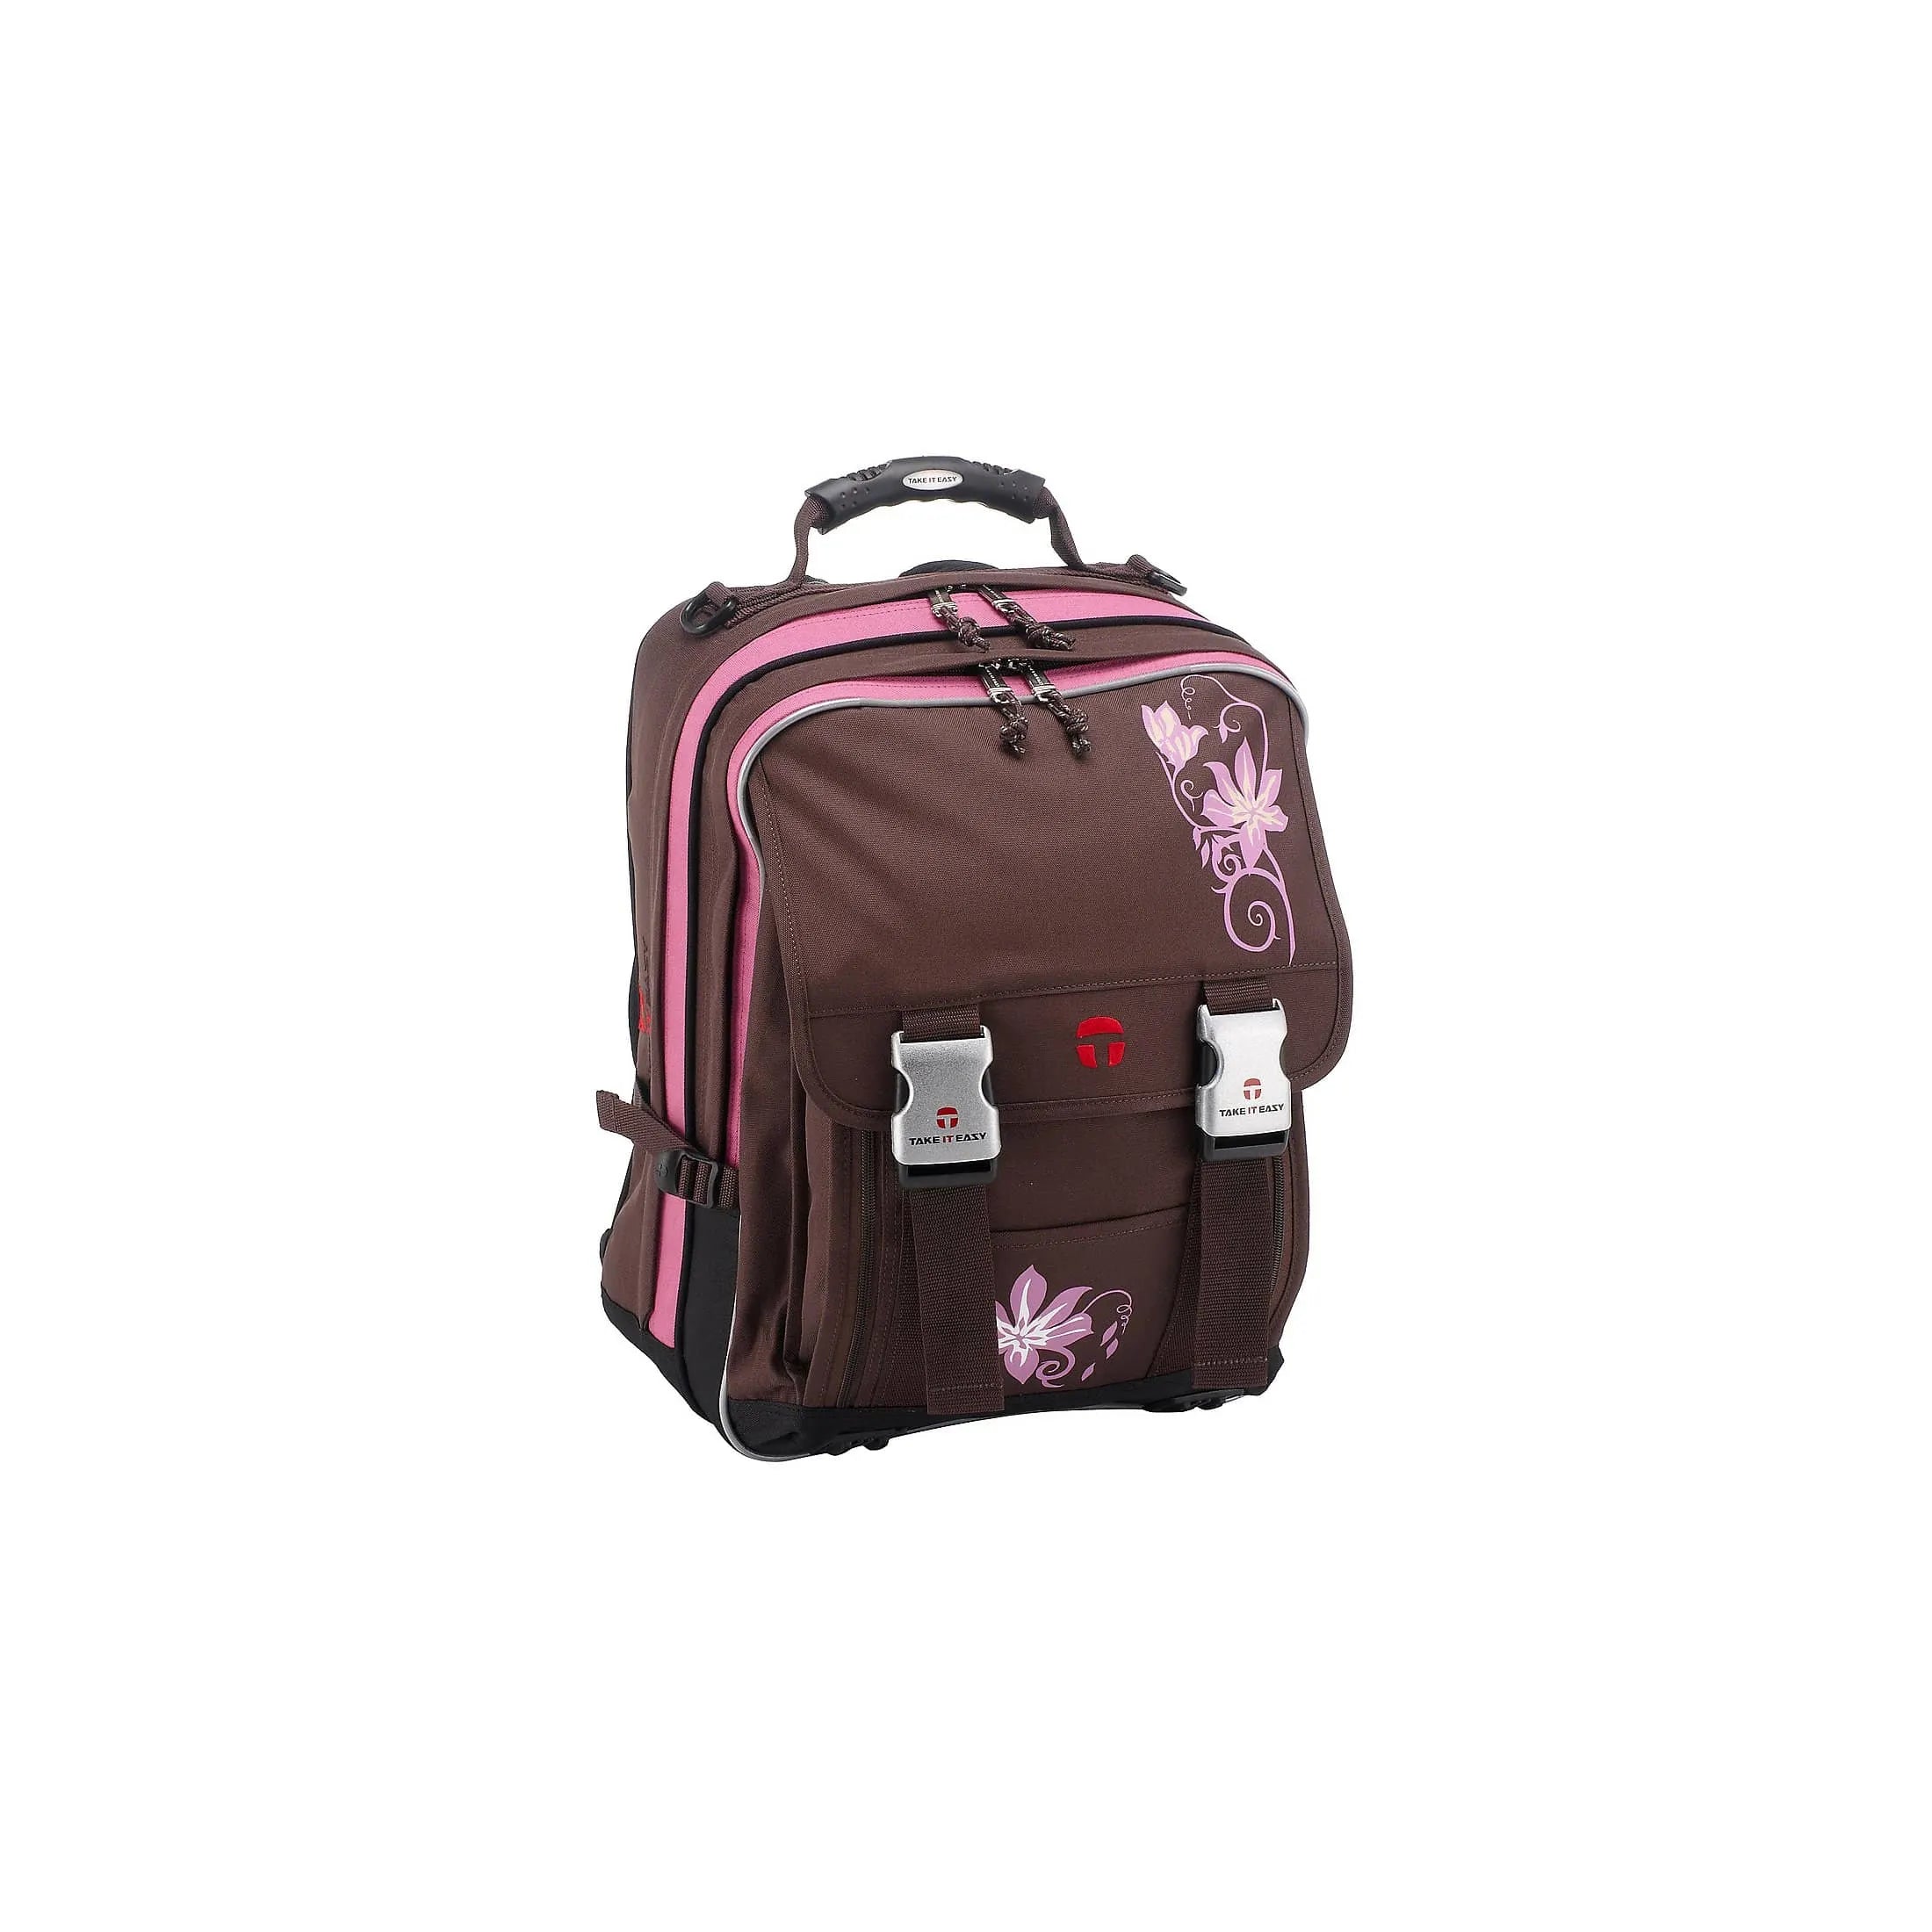 Take it Easy Actionbags sac à dos scolaire London 40 cm - rose fantaisie